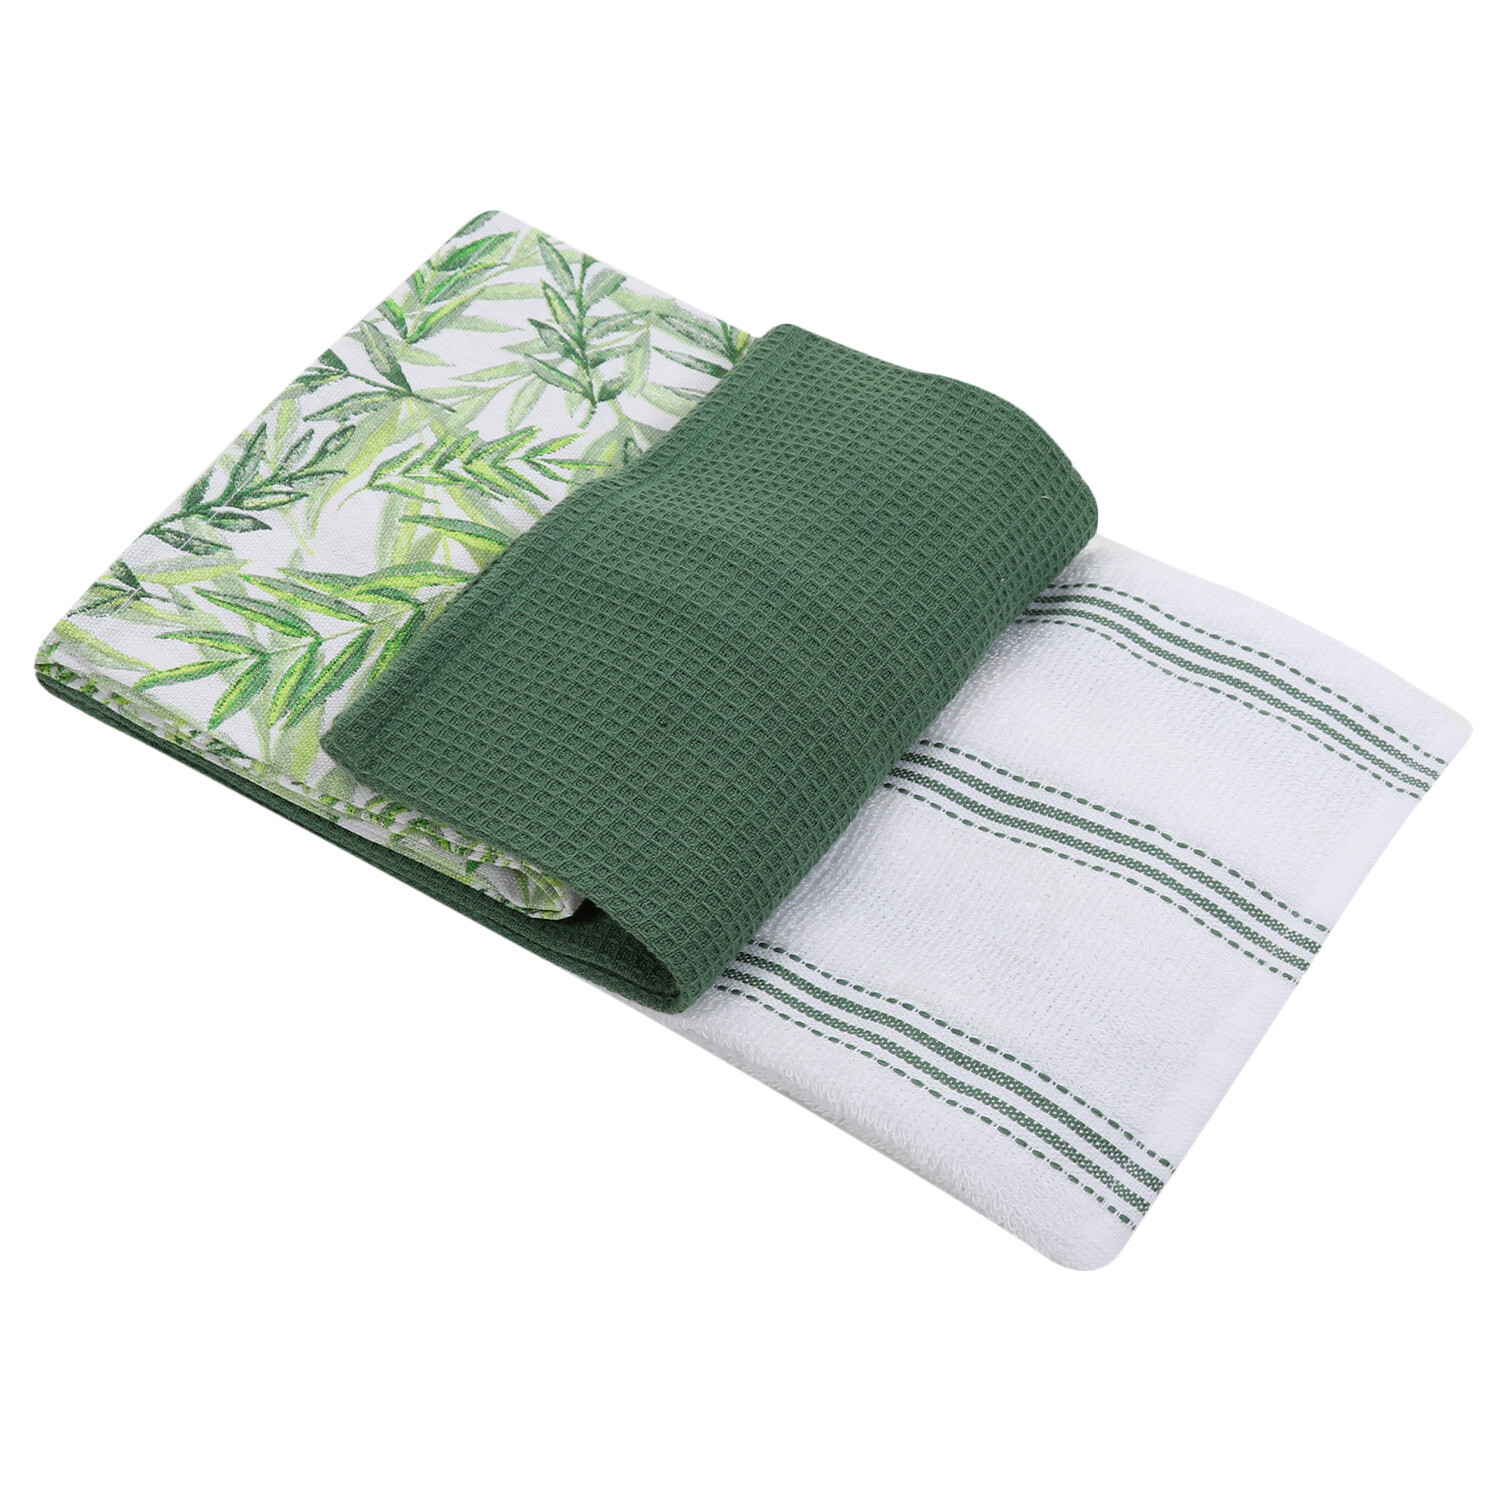 Green Botanical Tea Towels 3 Pack Image 2